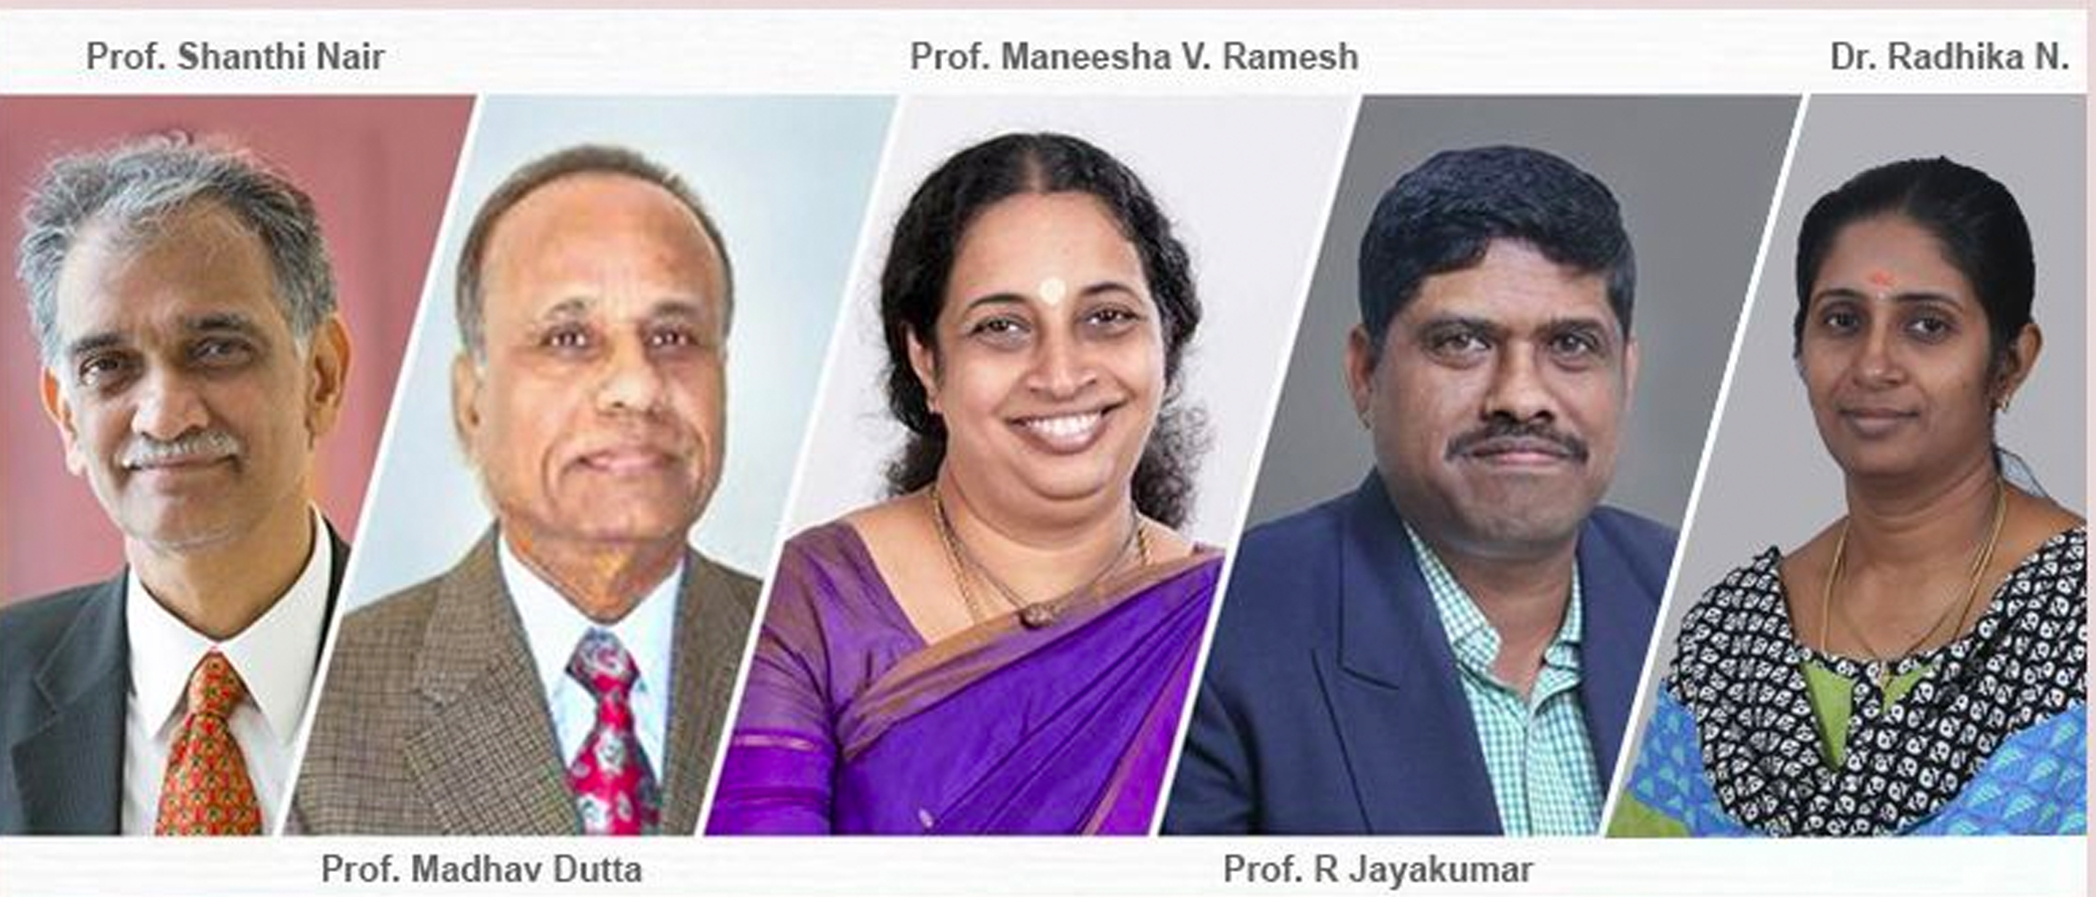 Dr. Maneesha Vinodini Ramesh, Dr. Shantikumar Nair, Dr. R. Jayakumar, and Dr. Madhav Dutta smiling